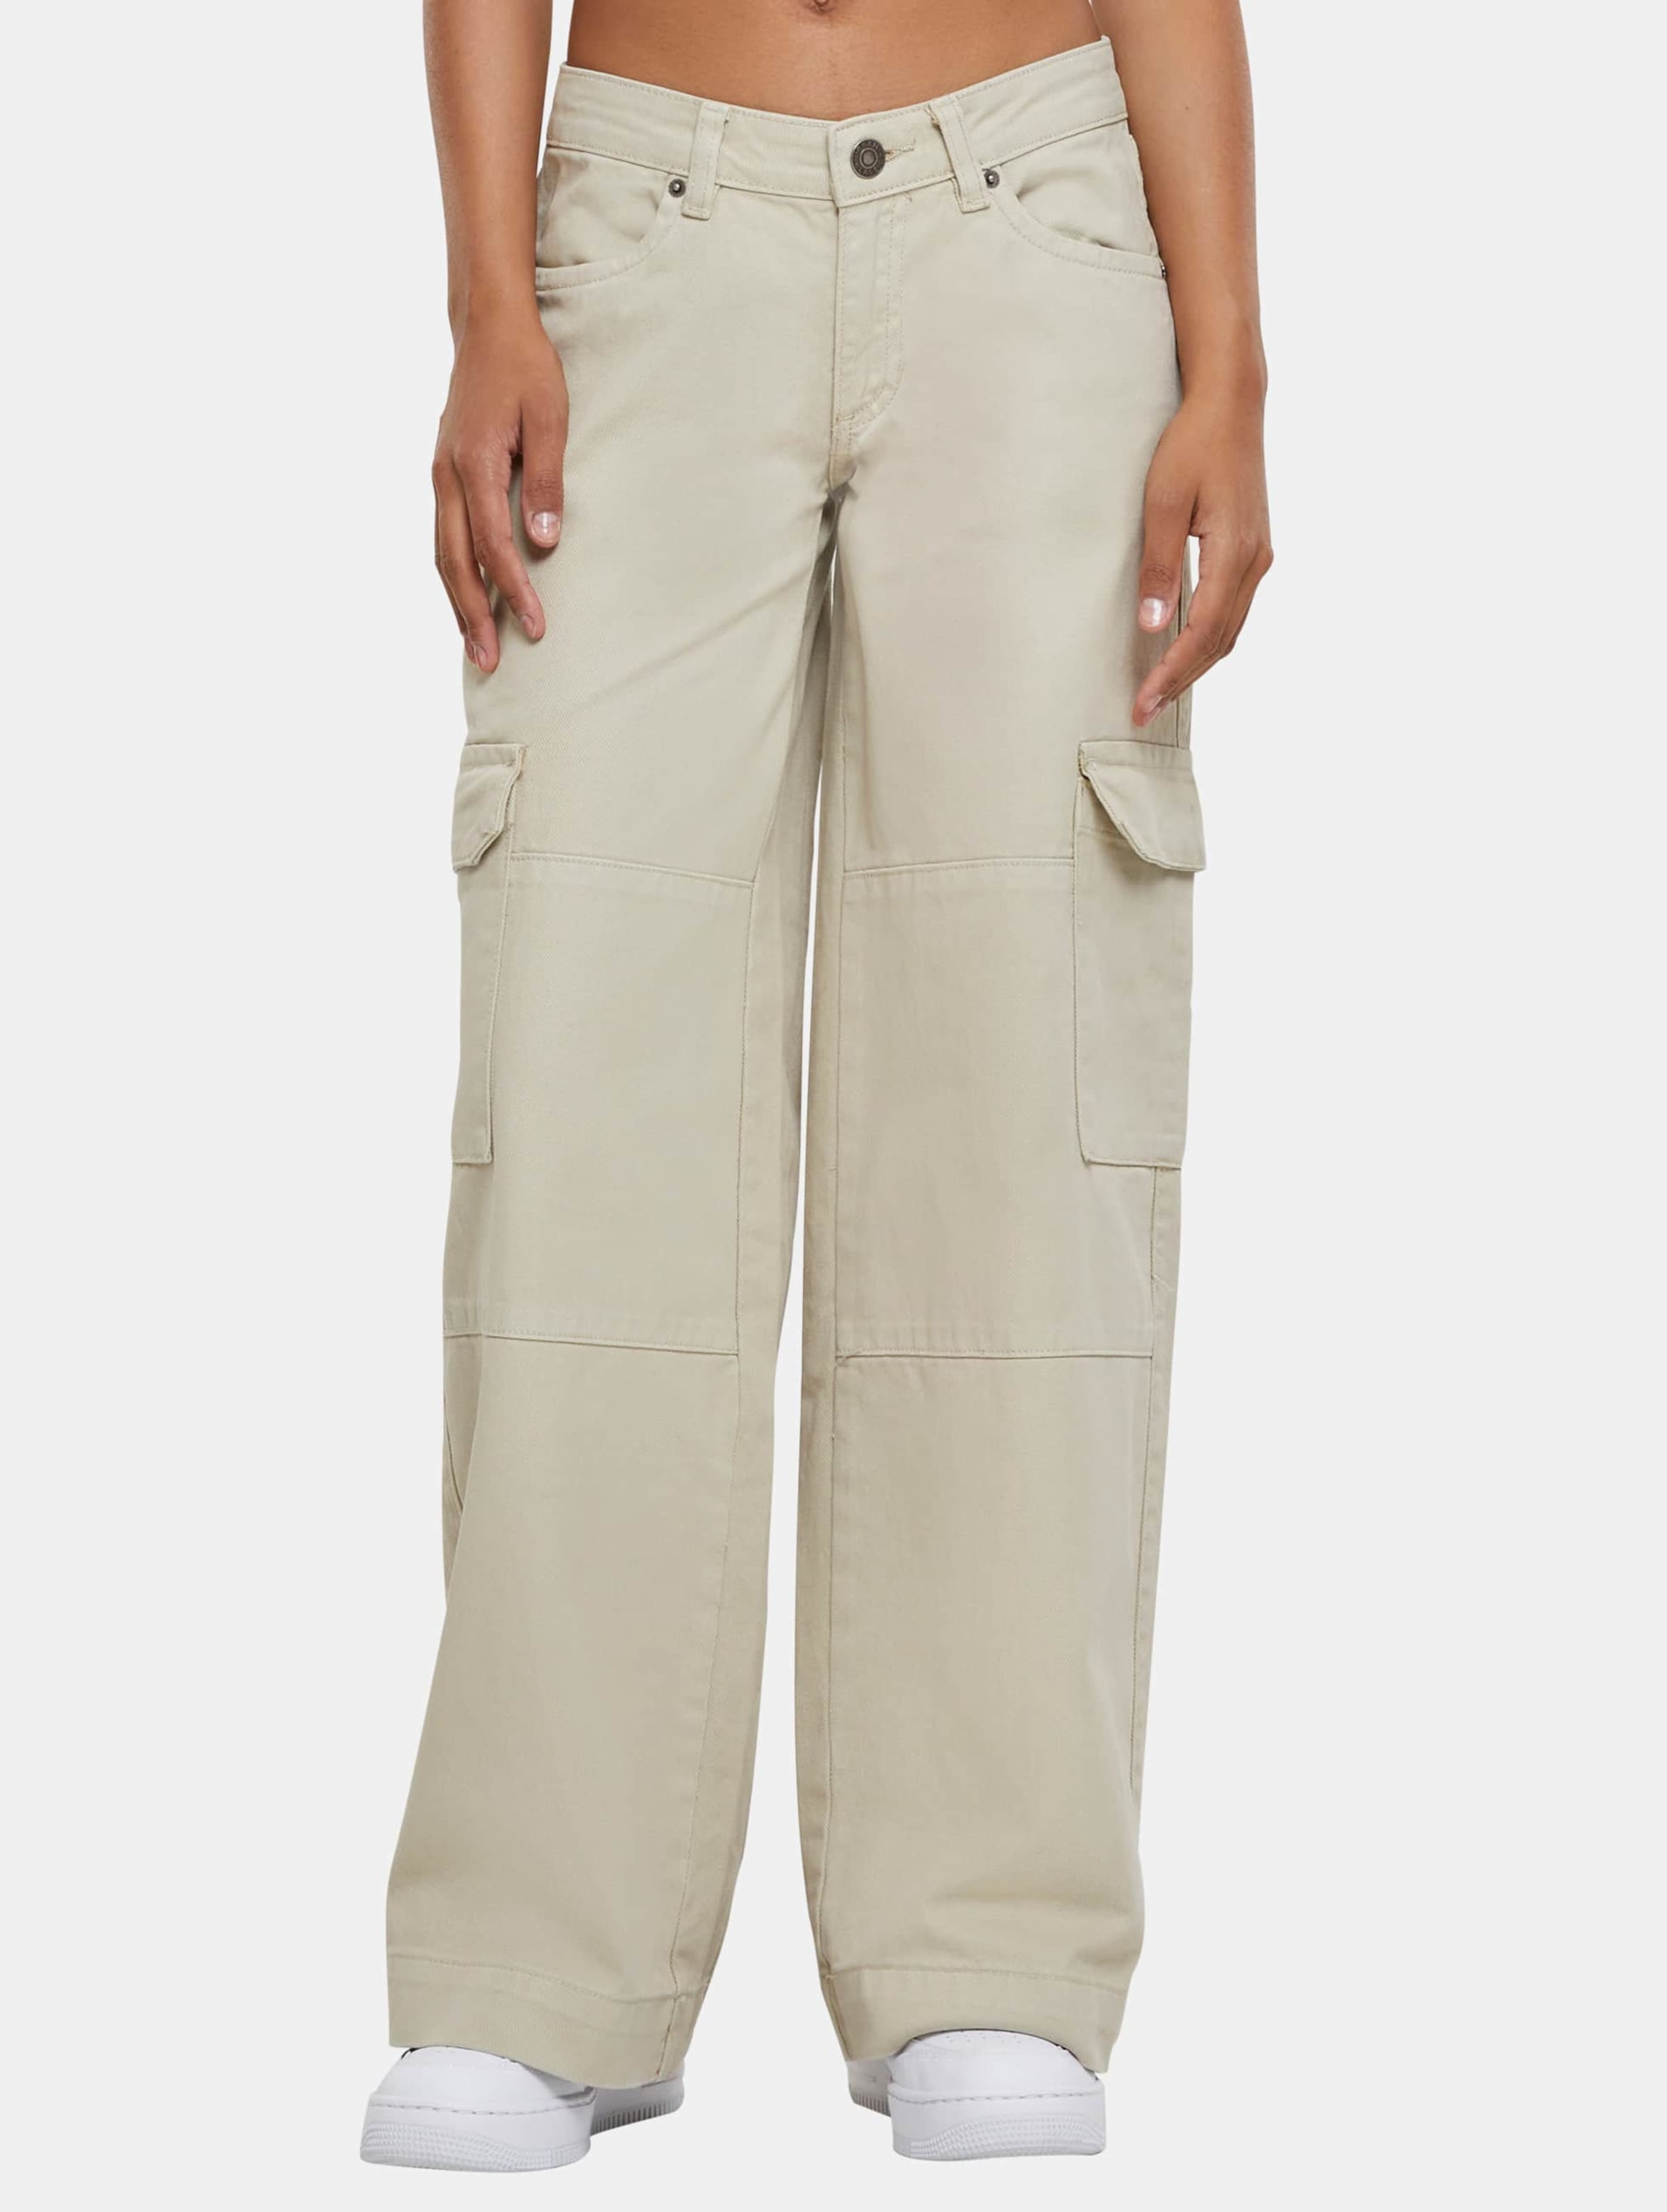 Urban Classics - Low Waist Denim Cargo trousers - Taille, 27 inch - Gebroken wit